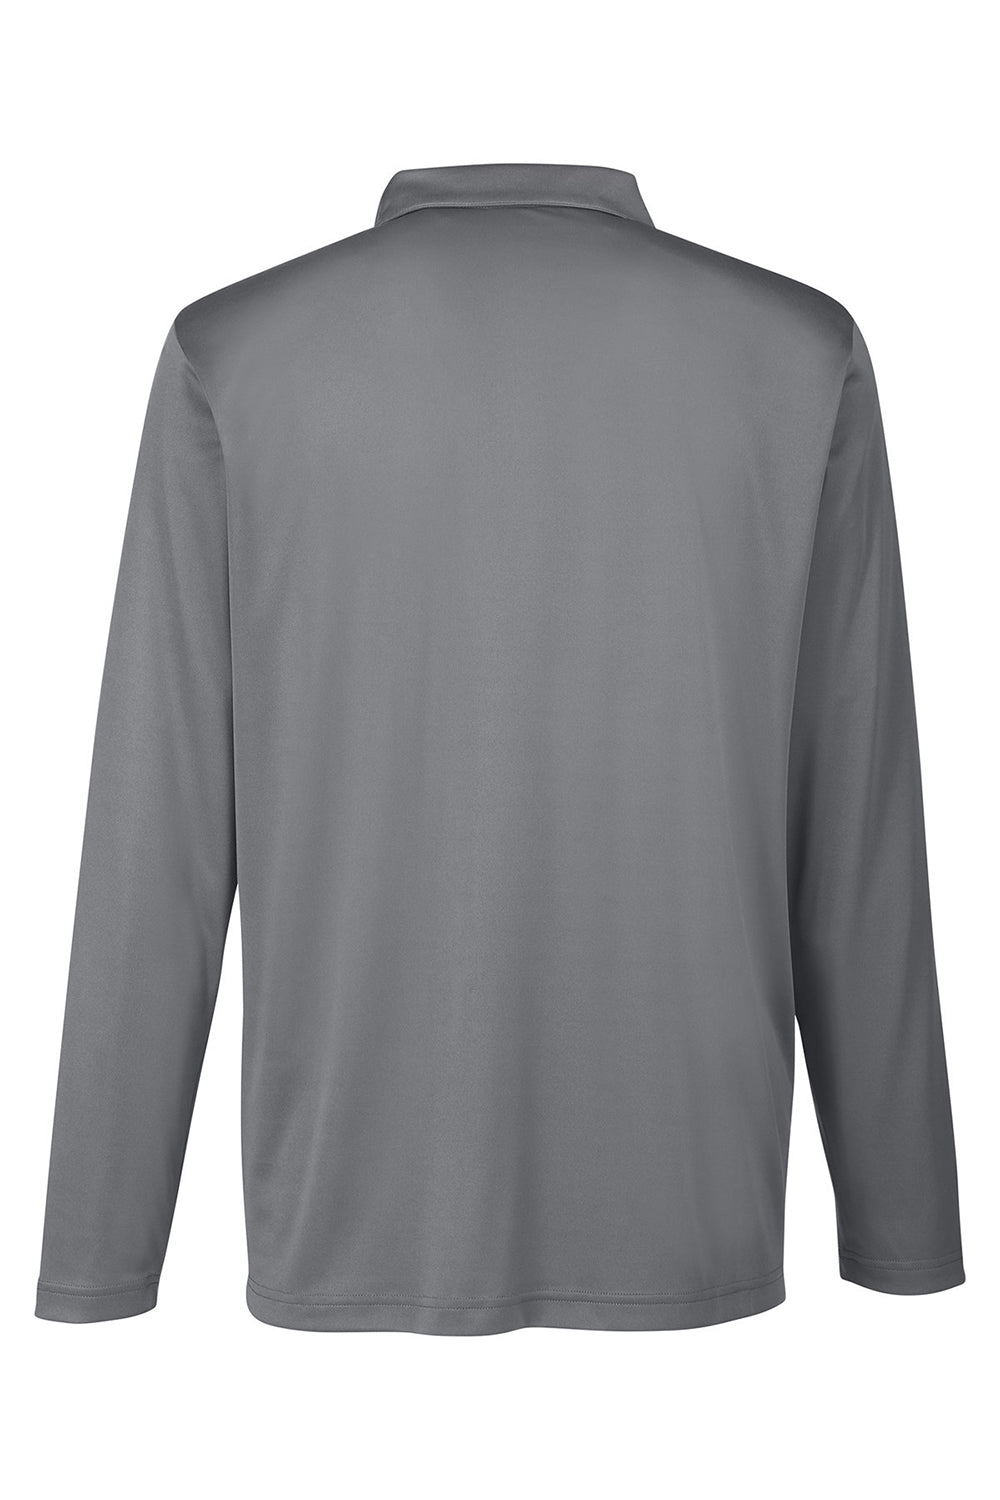 Team 365 TT51L Mens Zone Sonic Moisture Wicking Long Sleeve Polo Shirt Graphite Grey Flat Back